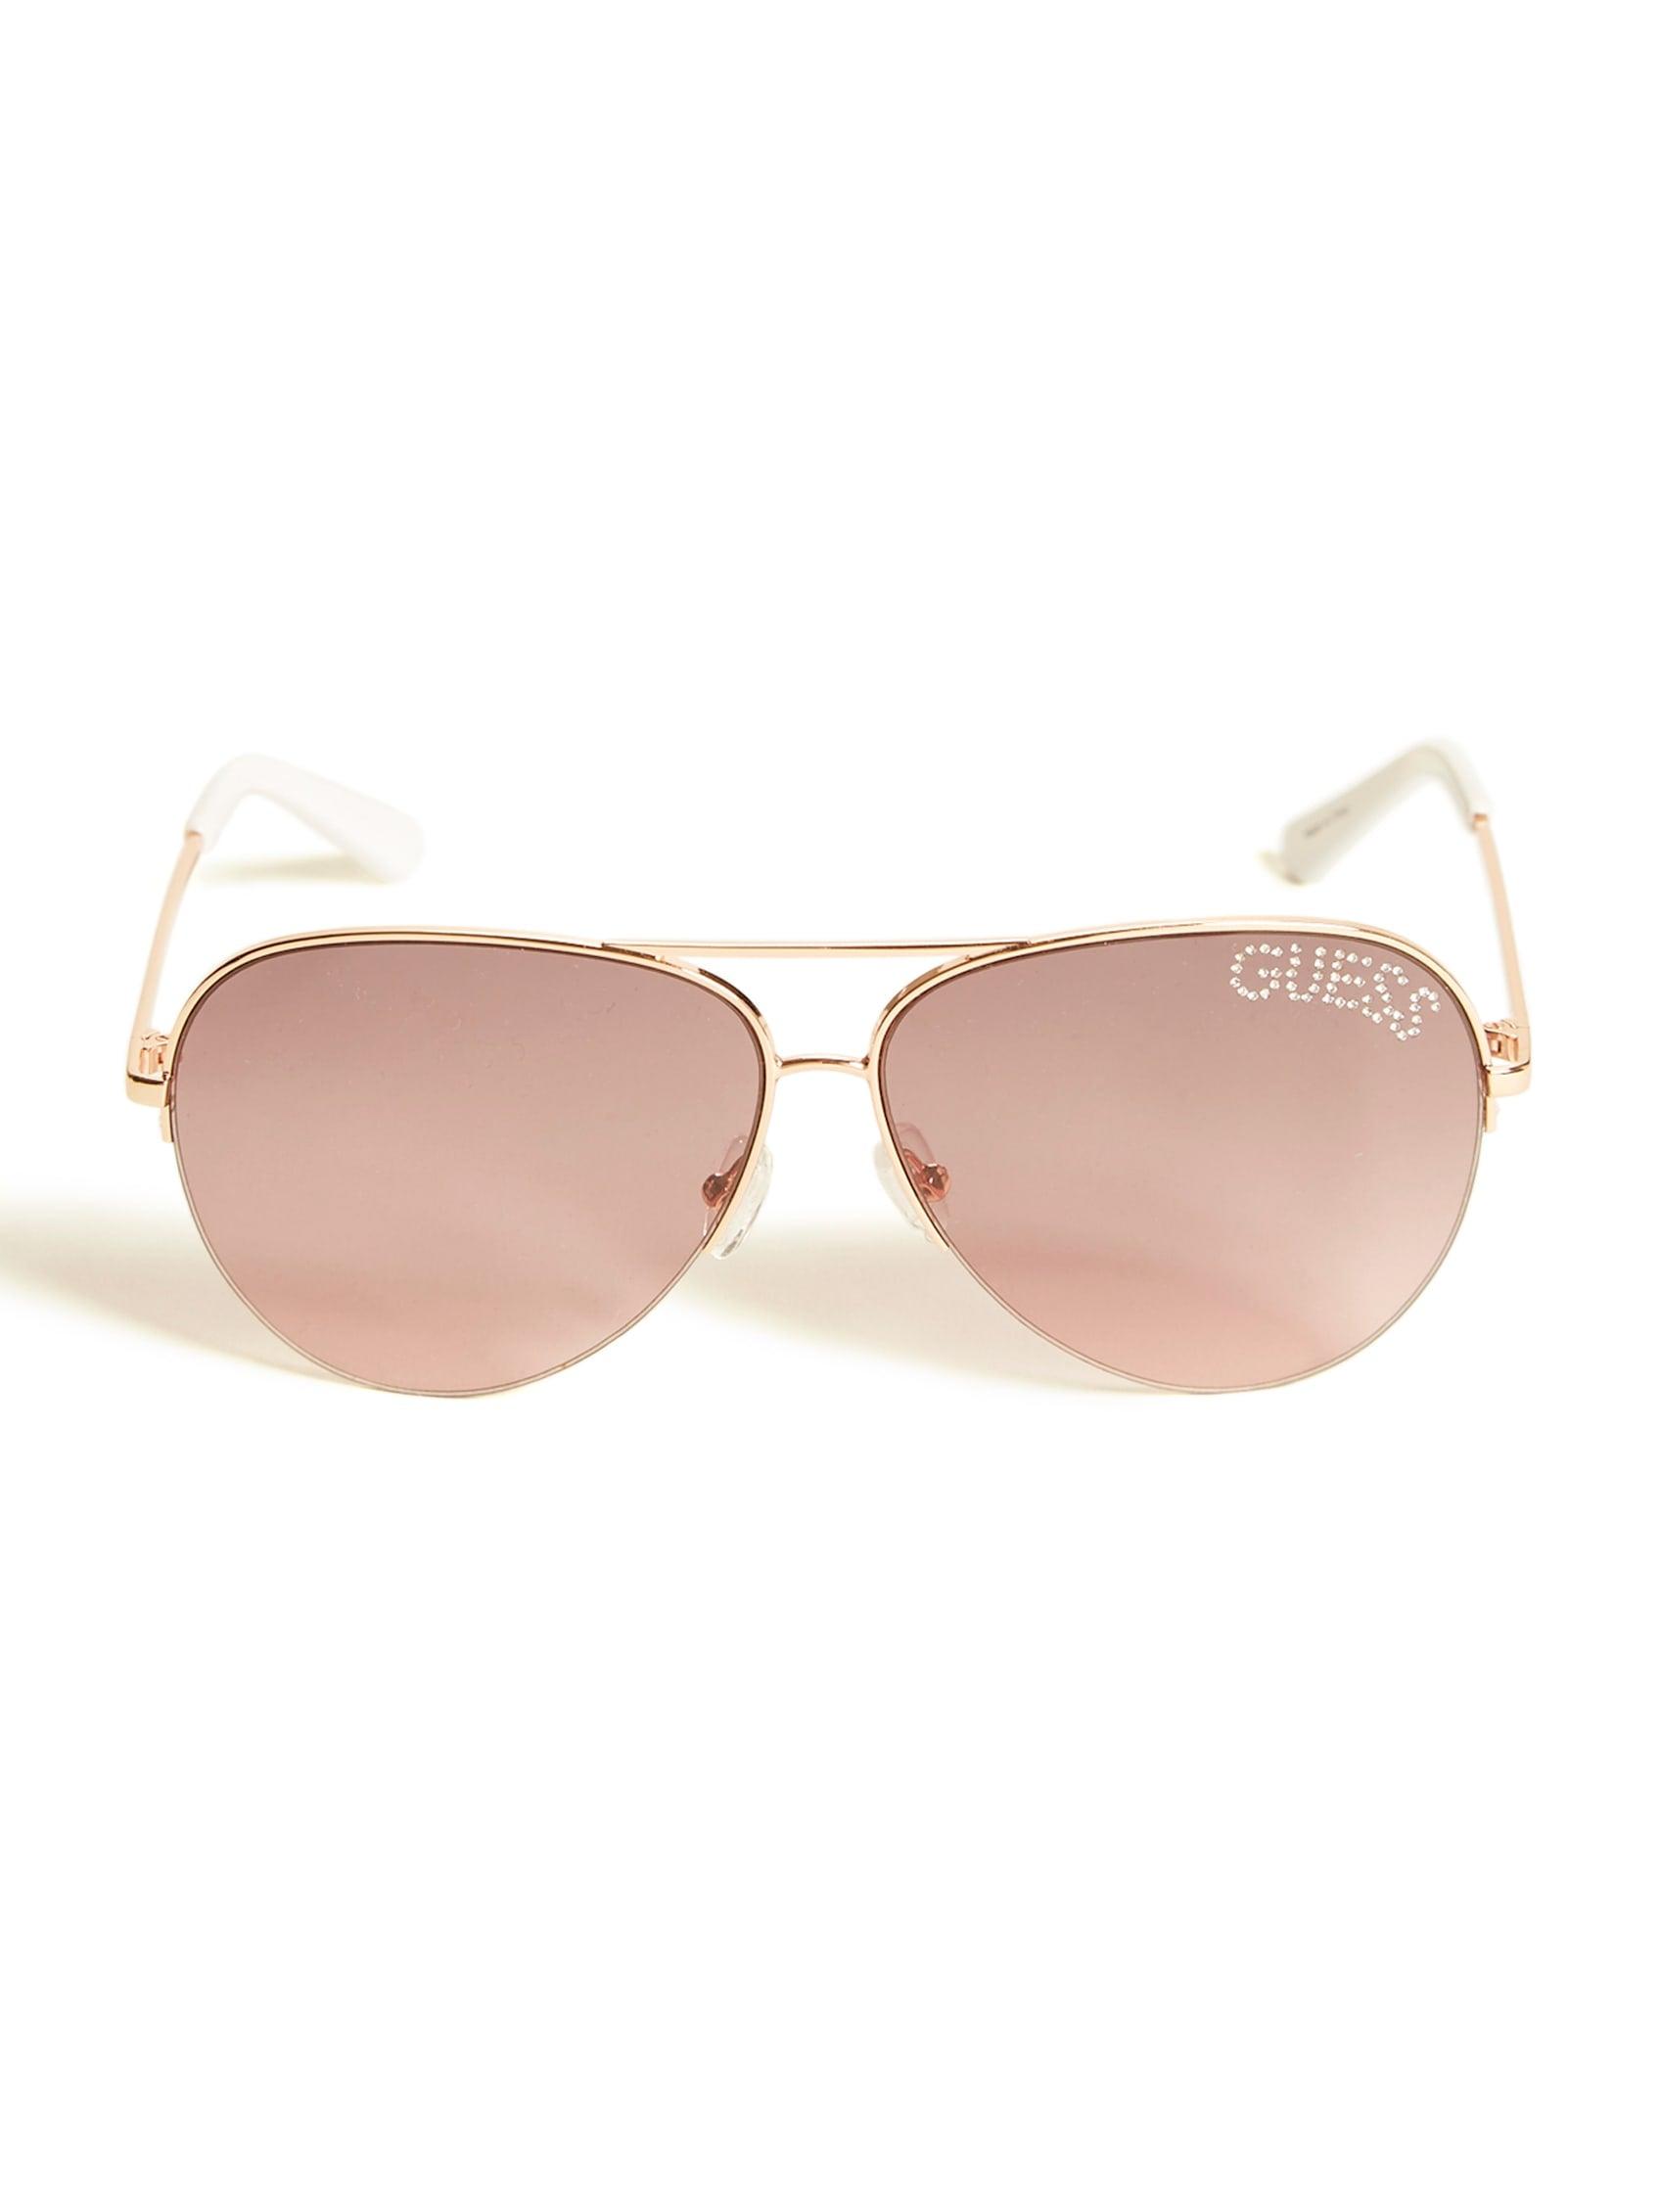 Guess Factory Rhinestone Logo Aviator Sunglasses in Pink | Lyst